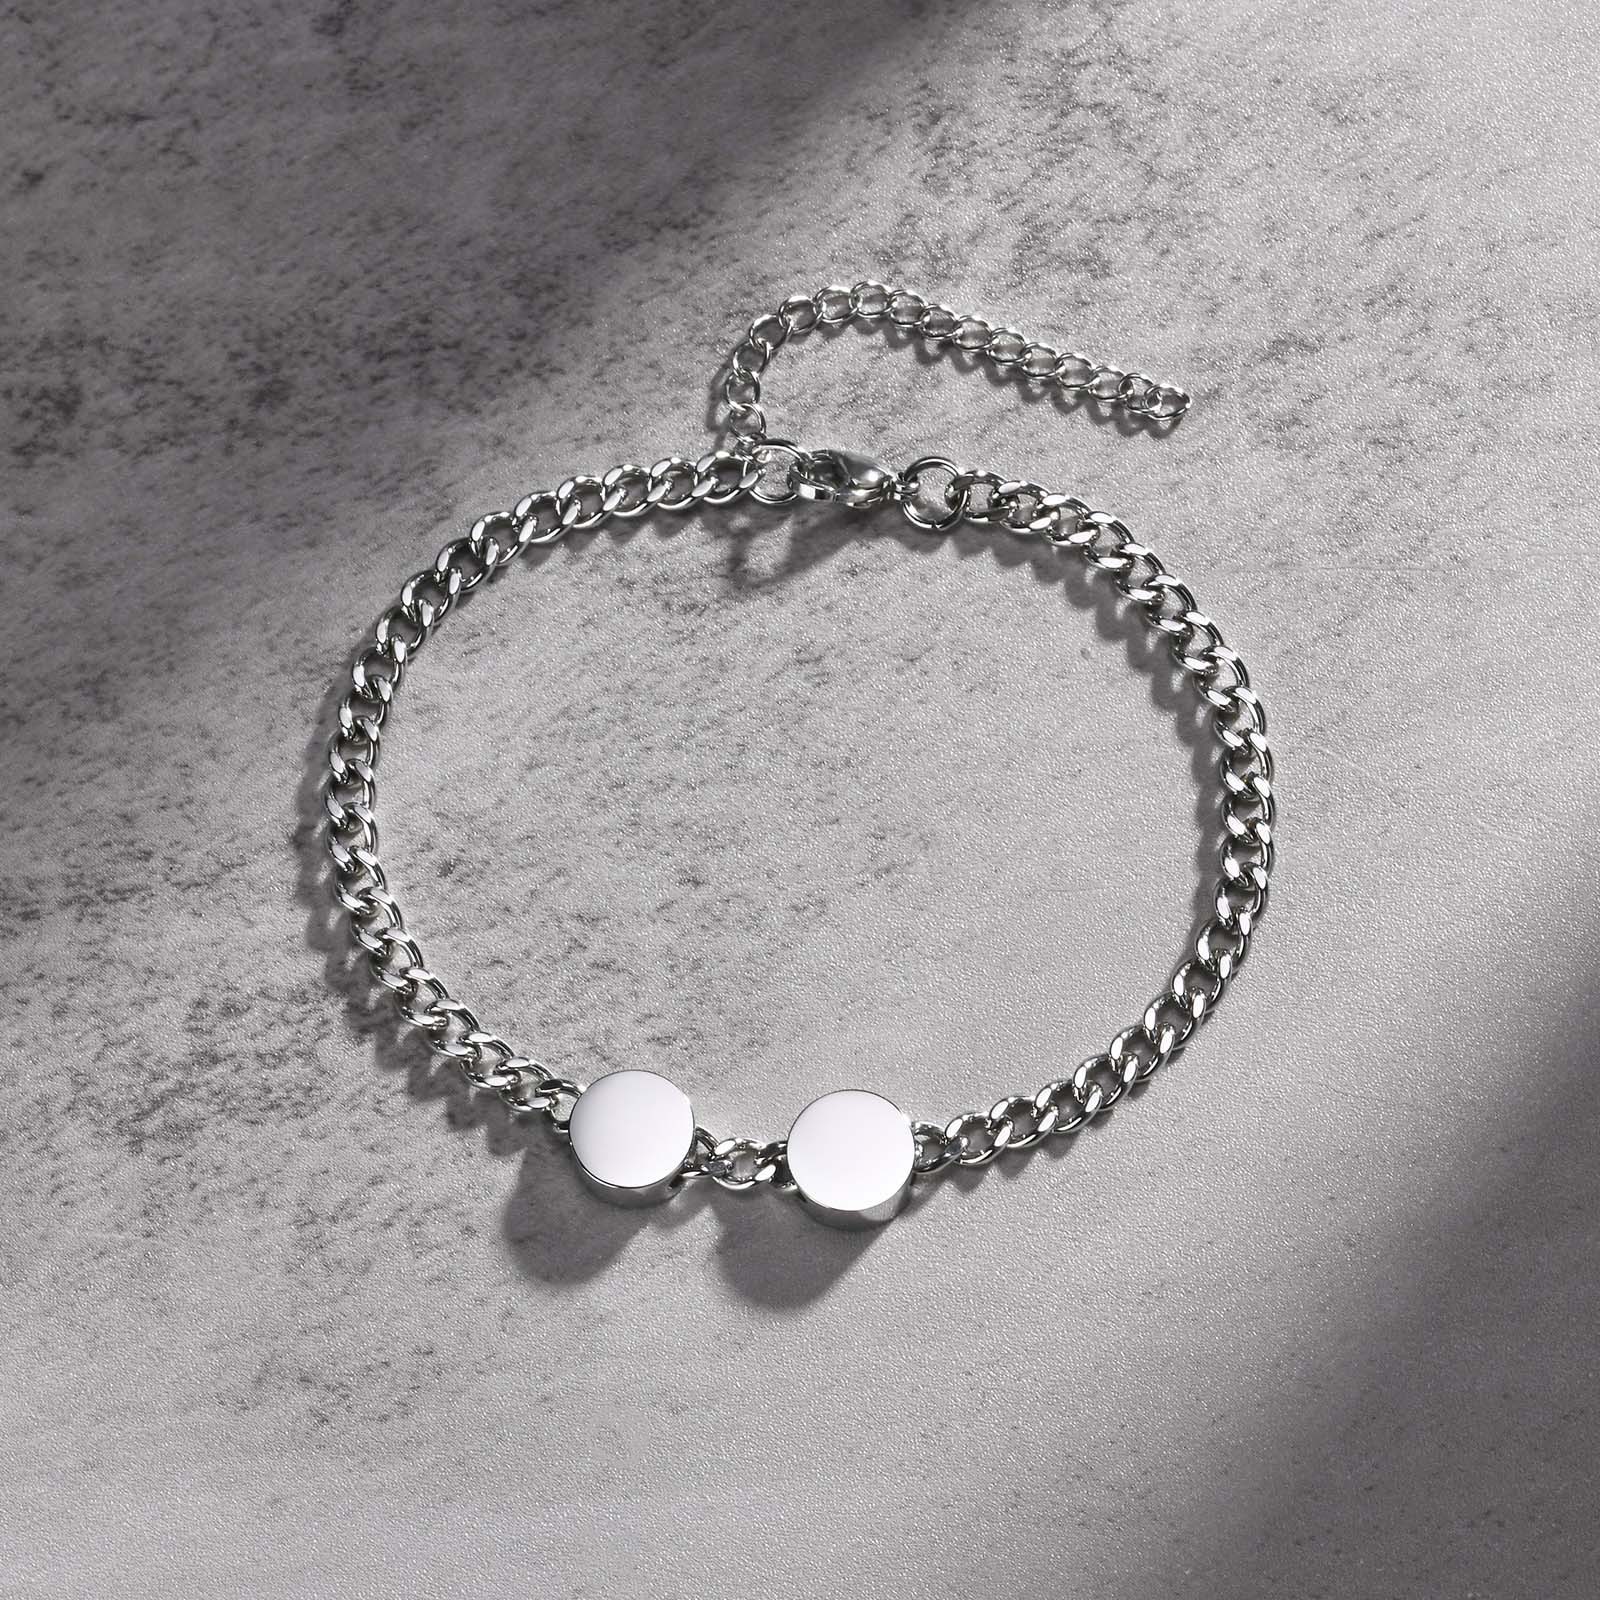 3:2 accessory [blank] bracelet